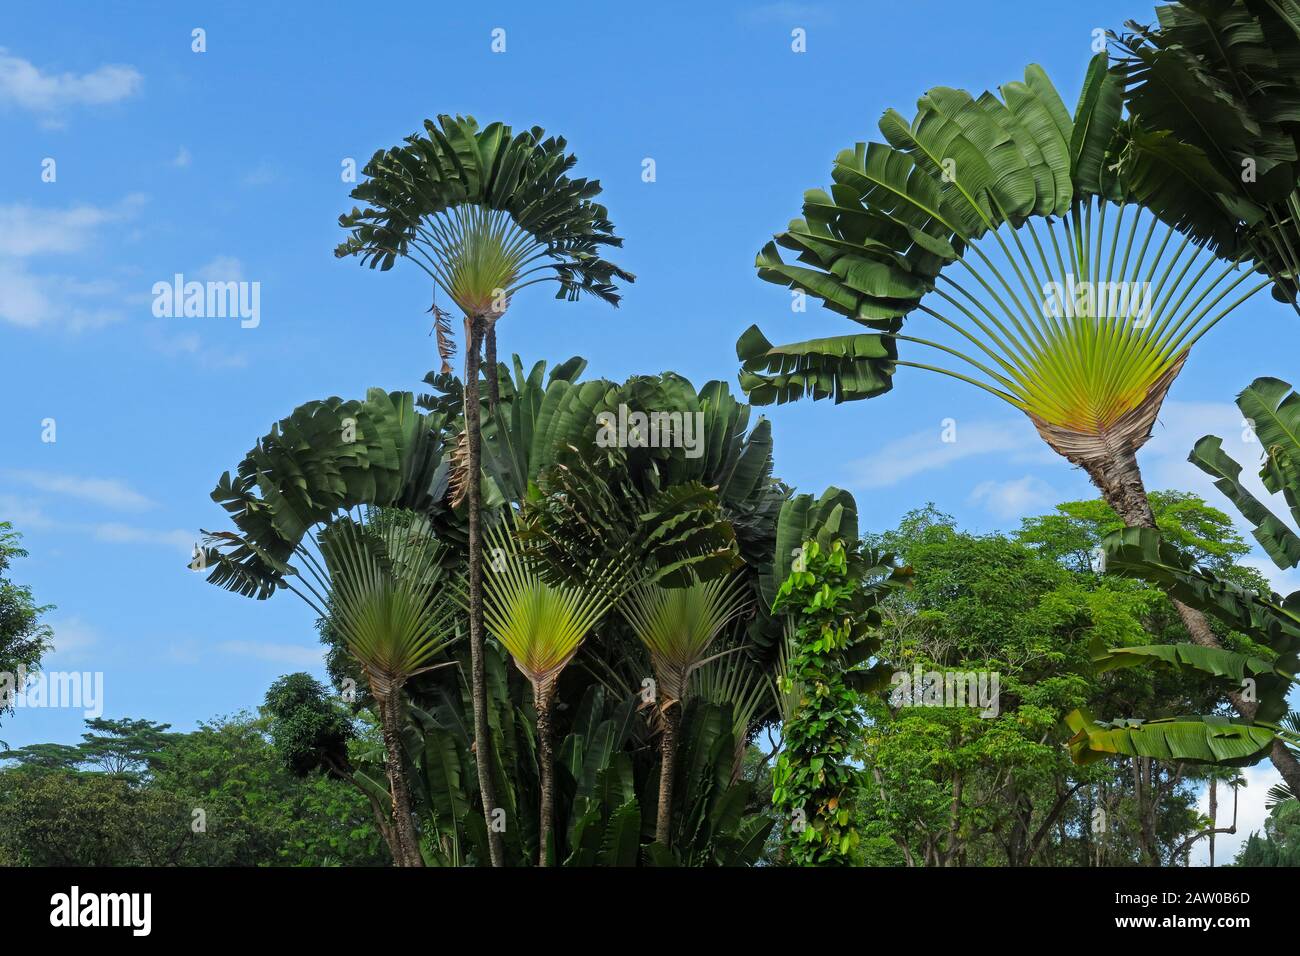 Image Traveller's tree (Ravenala madagascariensis), Singapore - 434104 -  Images of Plants and Gardens - botanikfoto